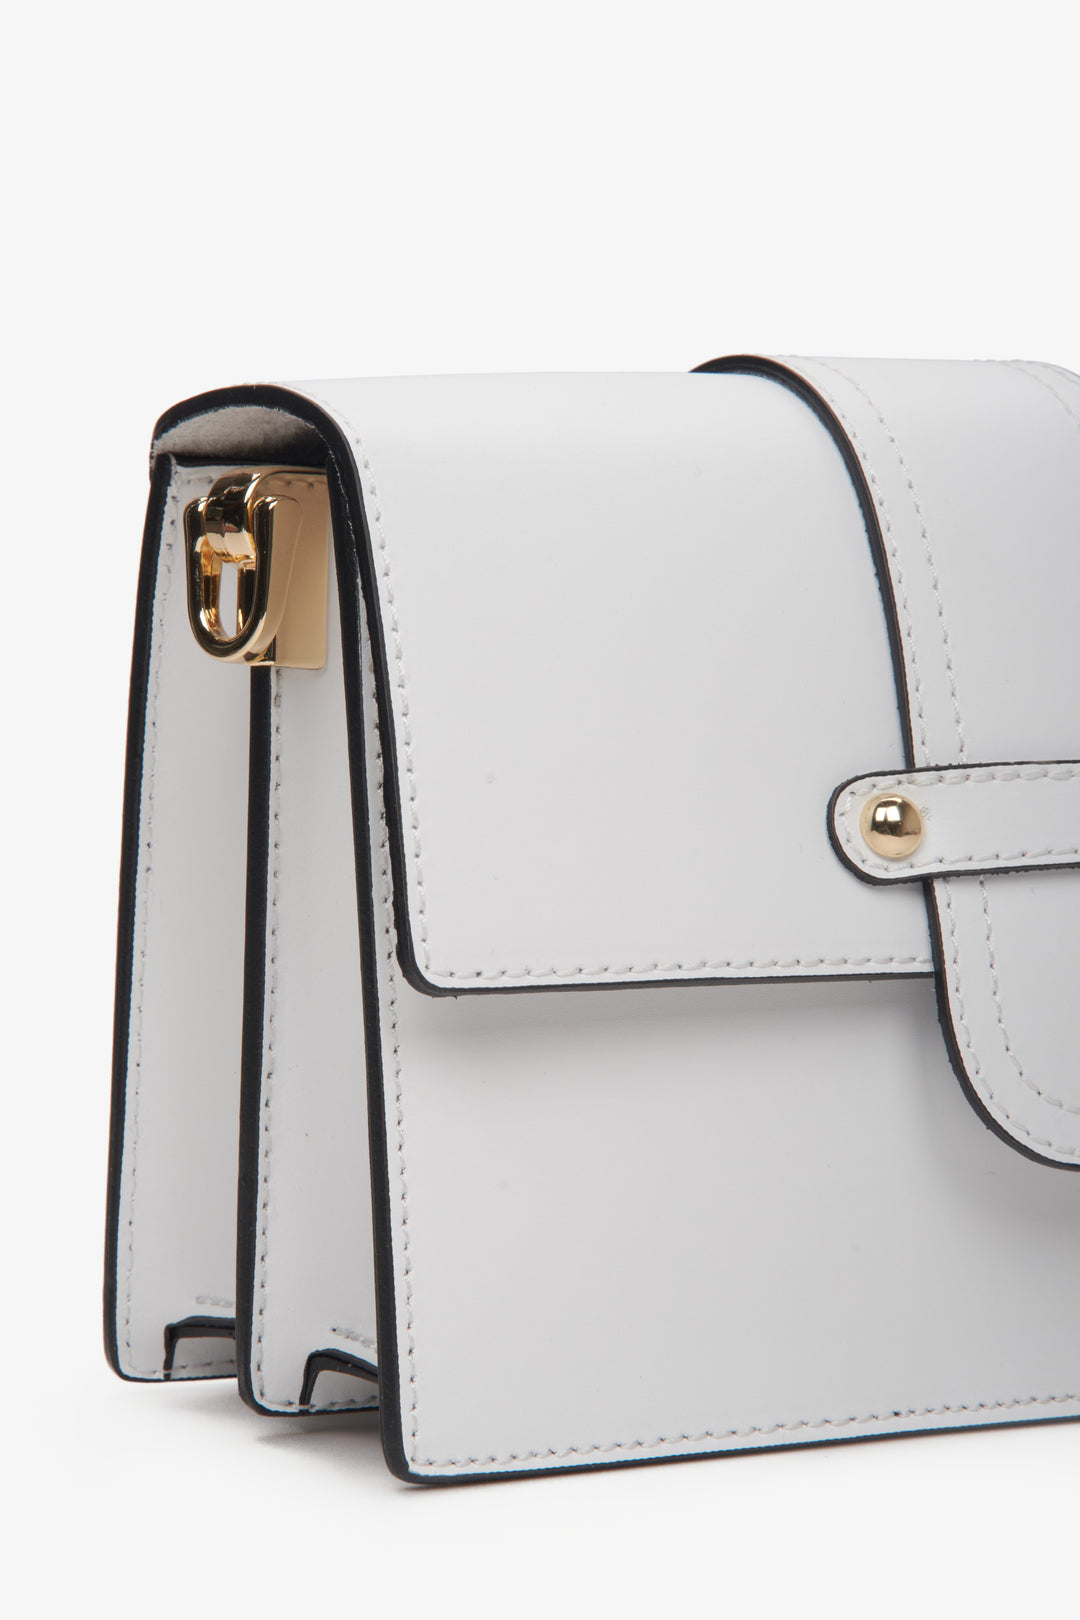 White women's shoulder bag by Estro - close up on details.